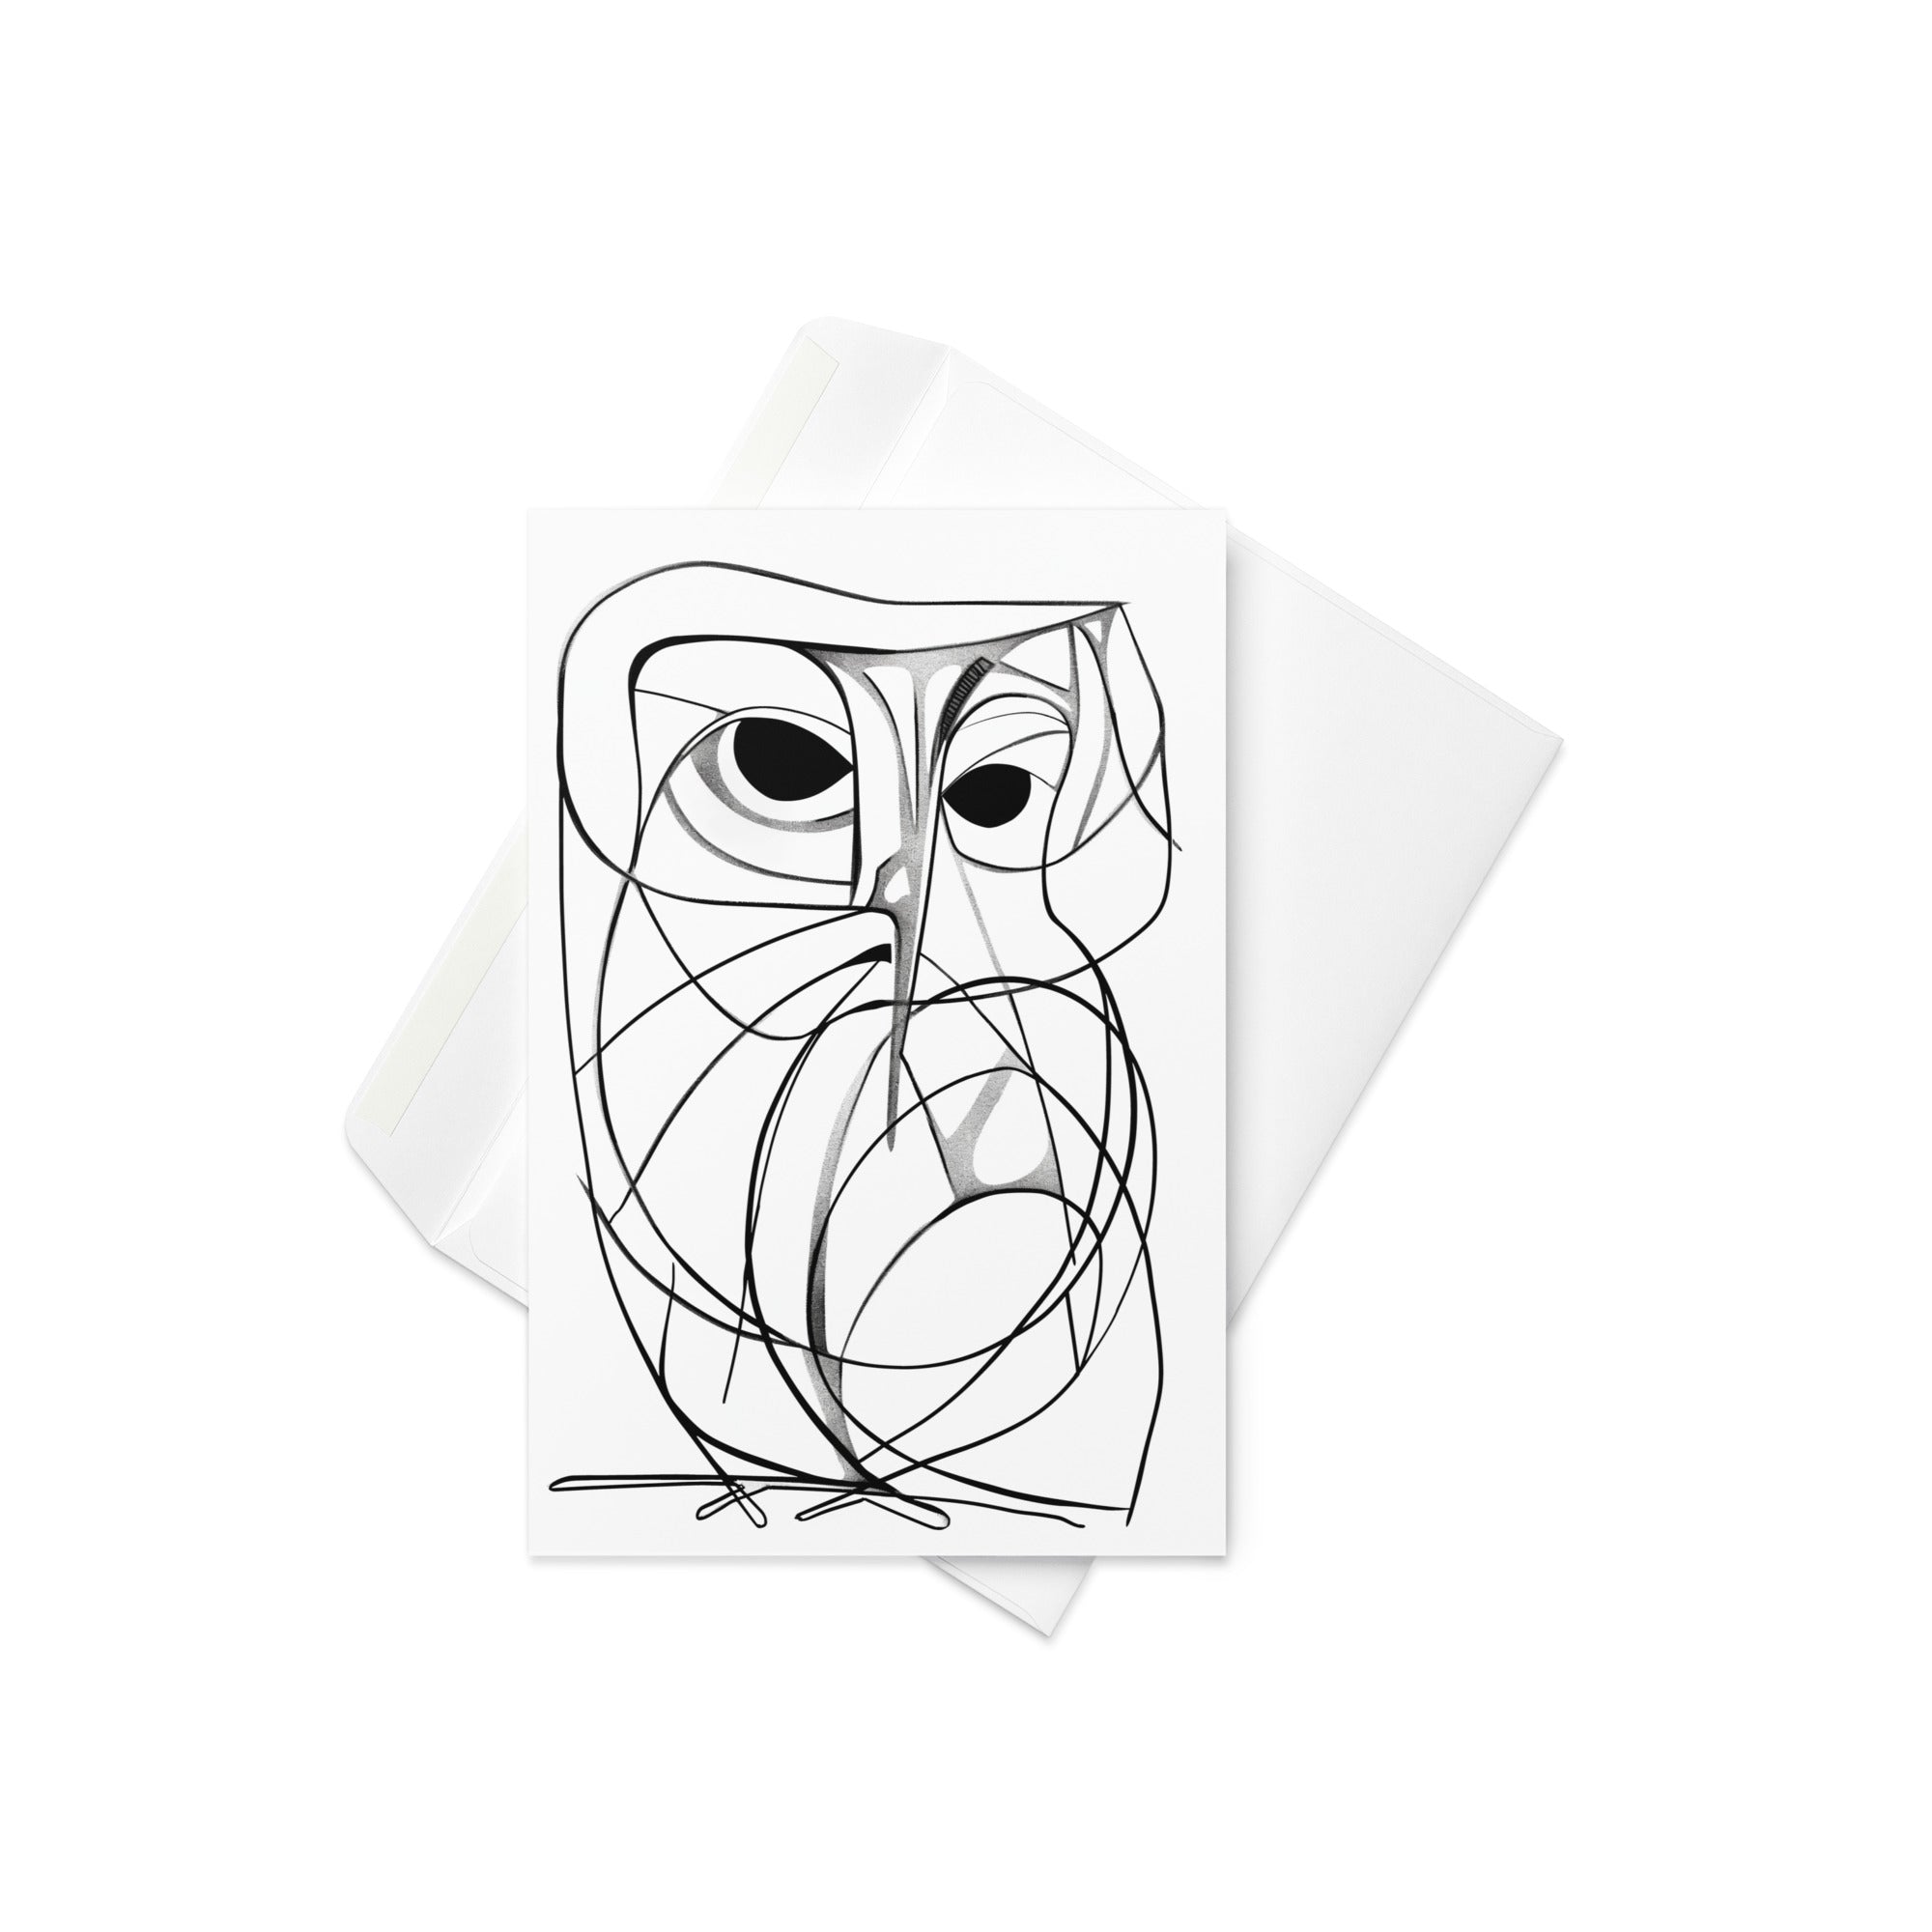 Owl Greeting Card - #1